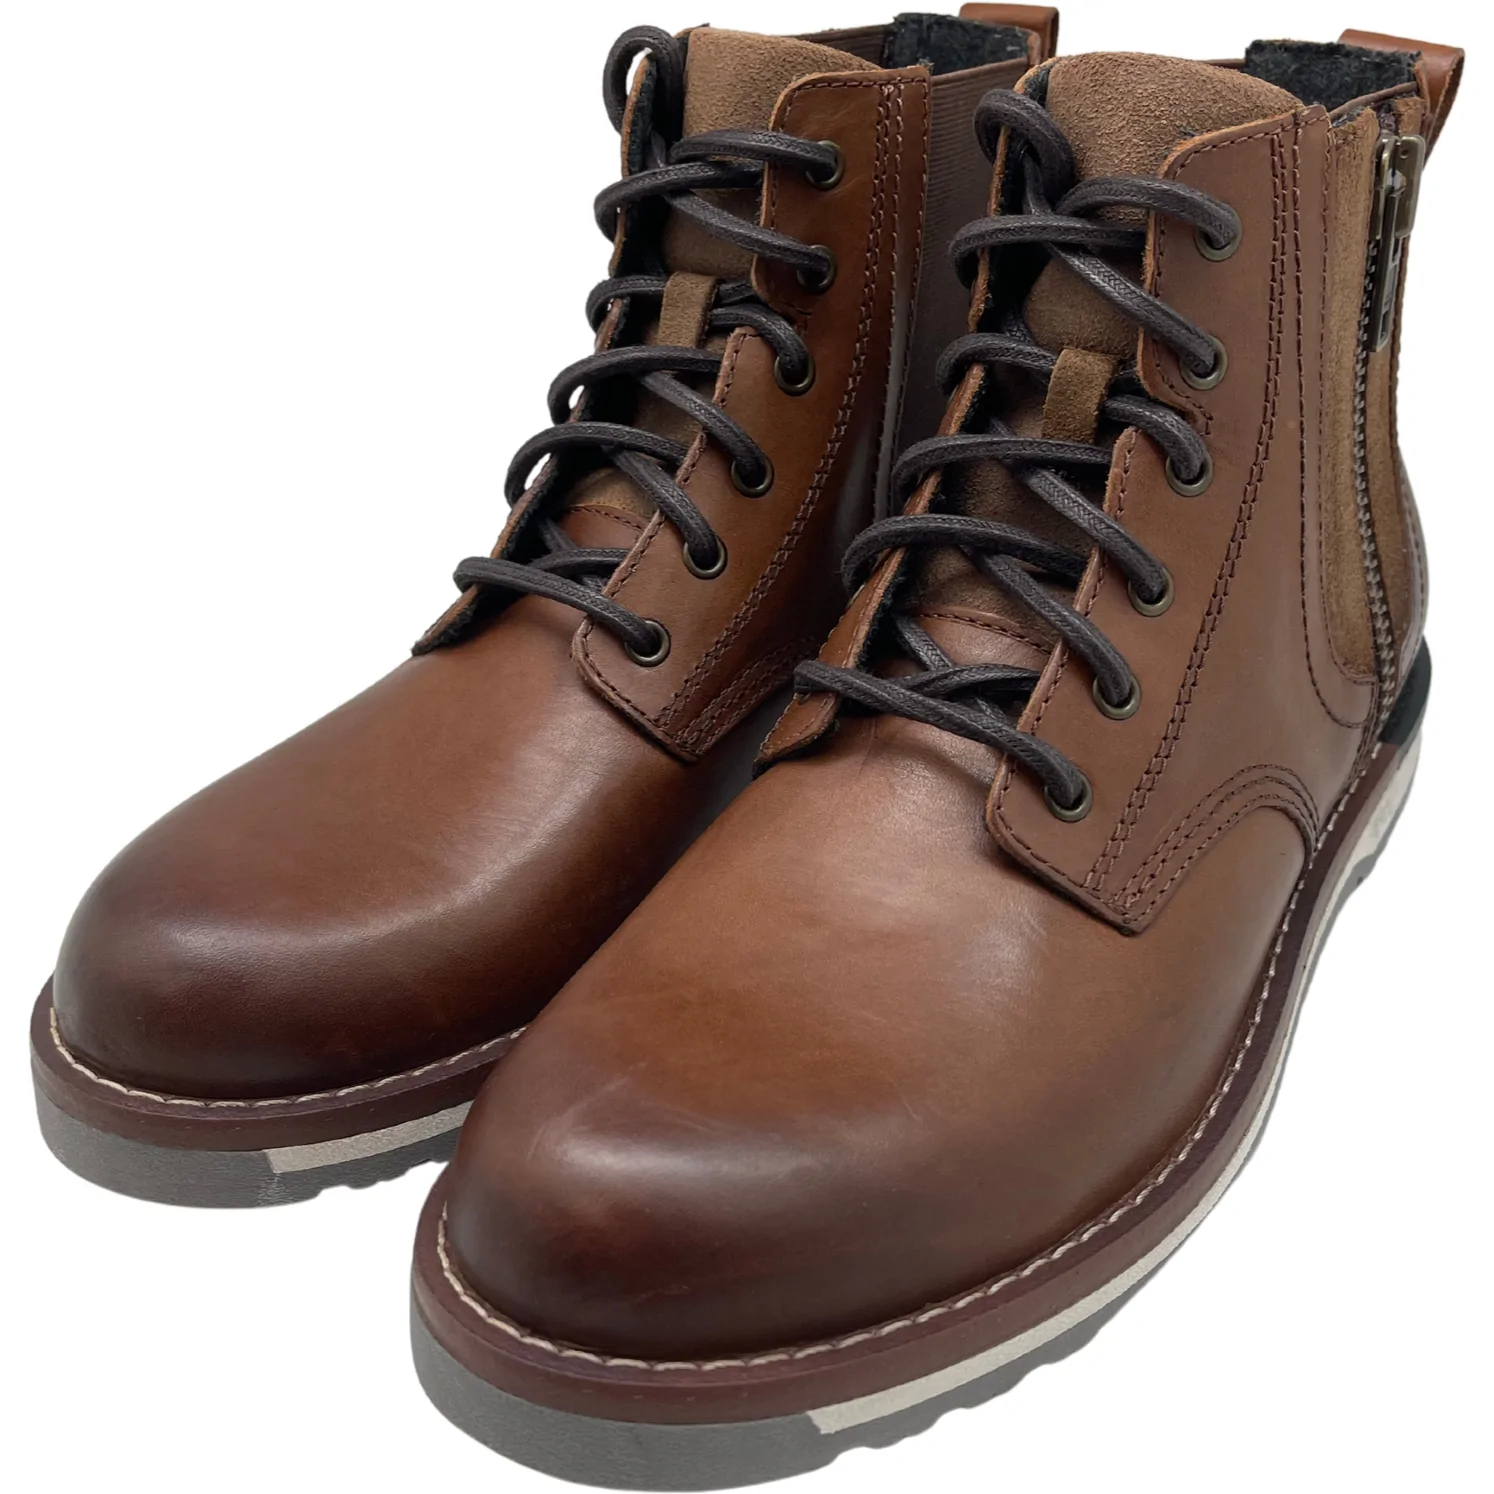 Aldo Men's Ankle Boots / Garhault / Brown / Size 8